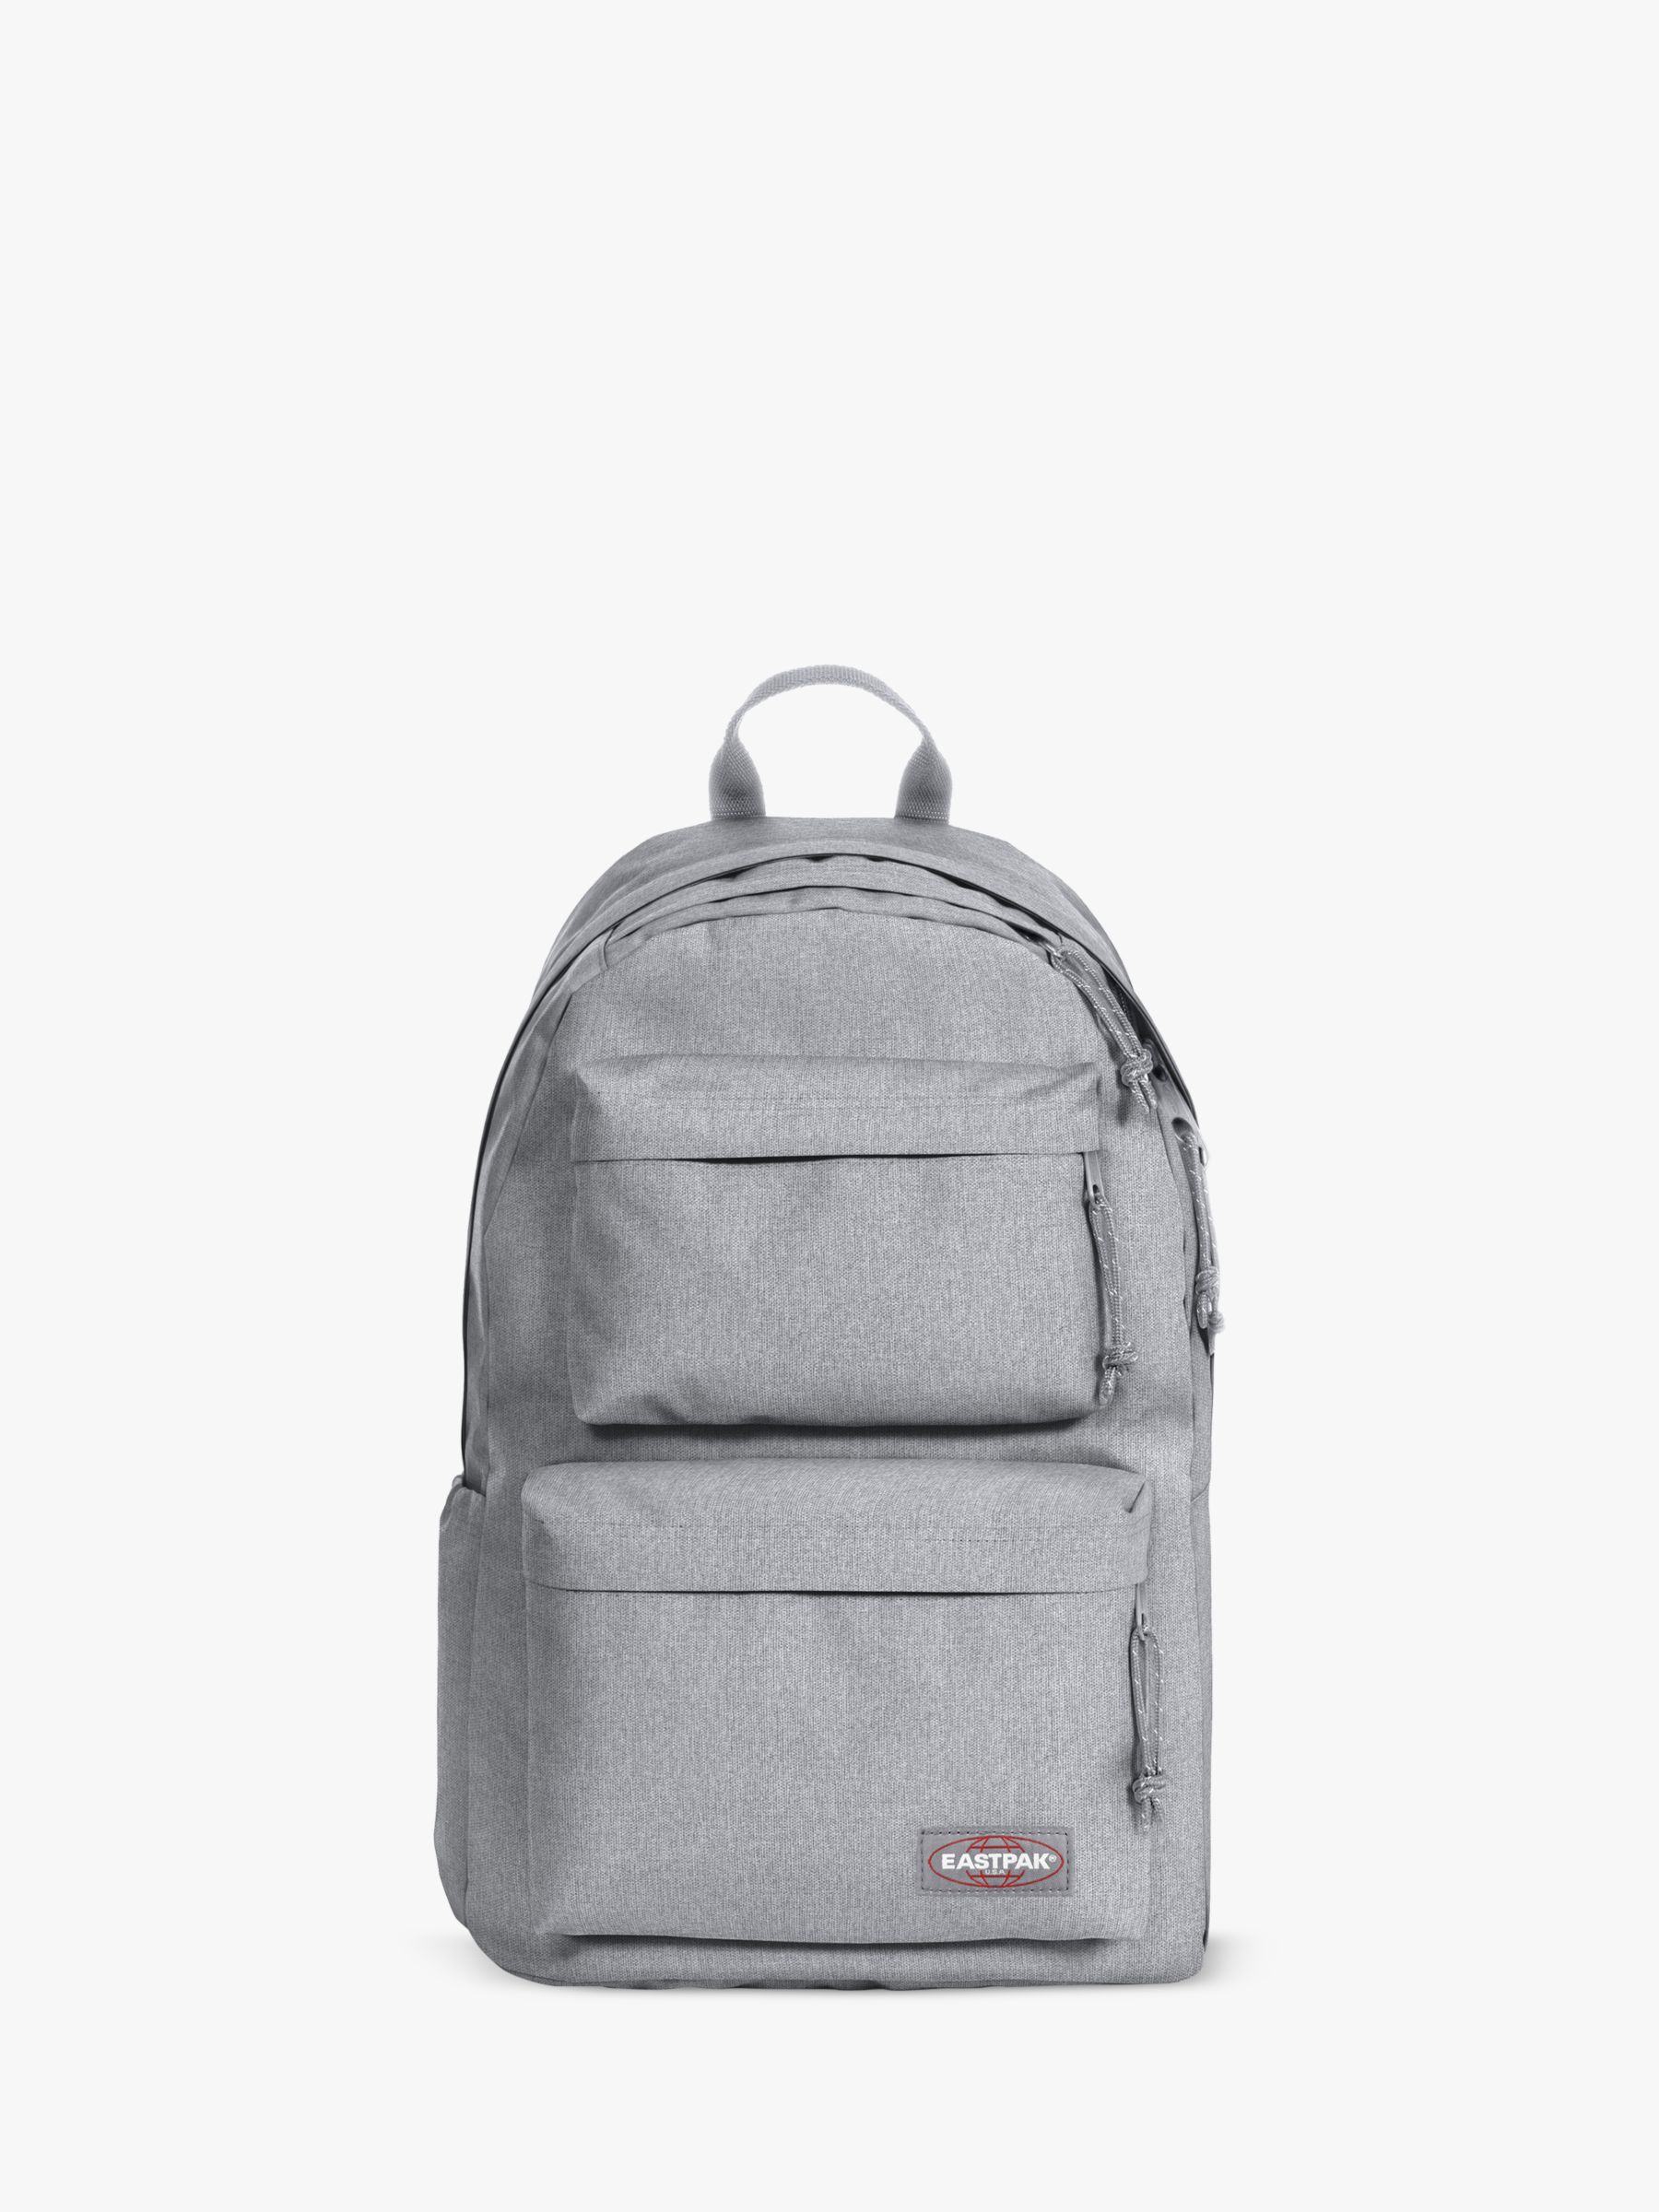 vos Interesseren Dwaal Backpacks - Eastpak, Grey | John Lewis & Partners